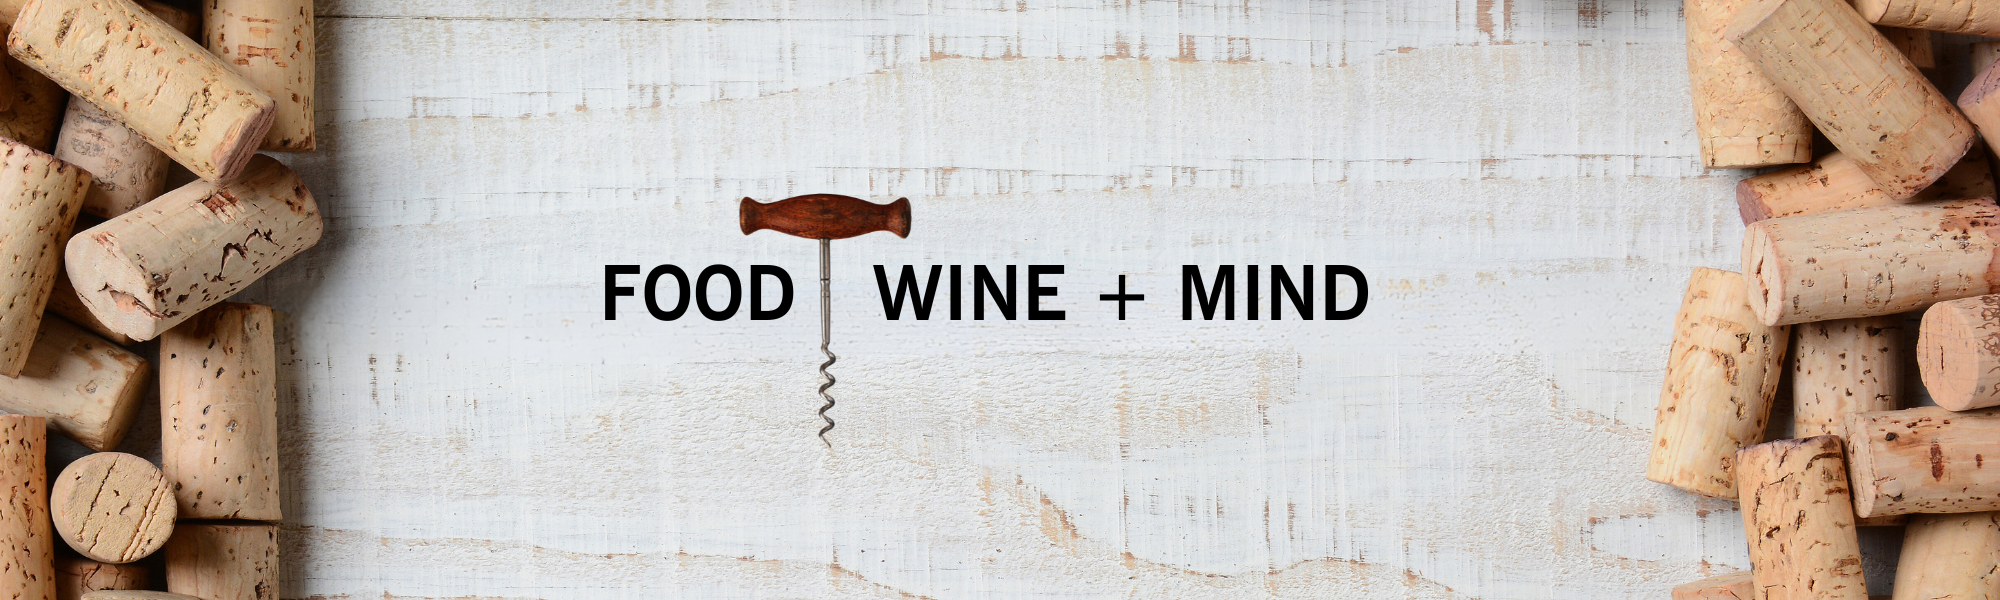 FOOD  WINE + MIND (2000 x 600 px) (3).png